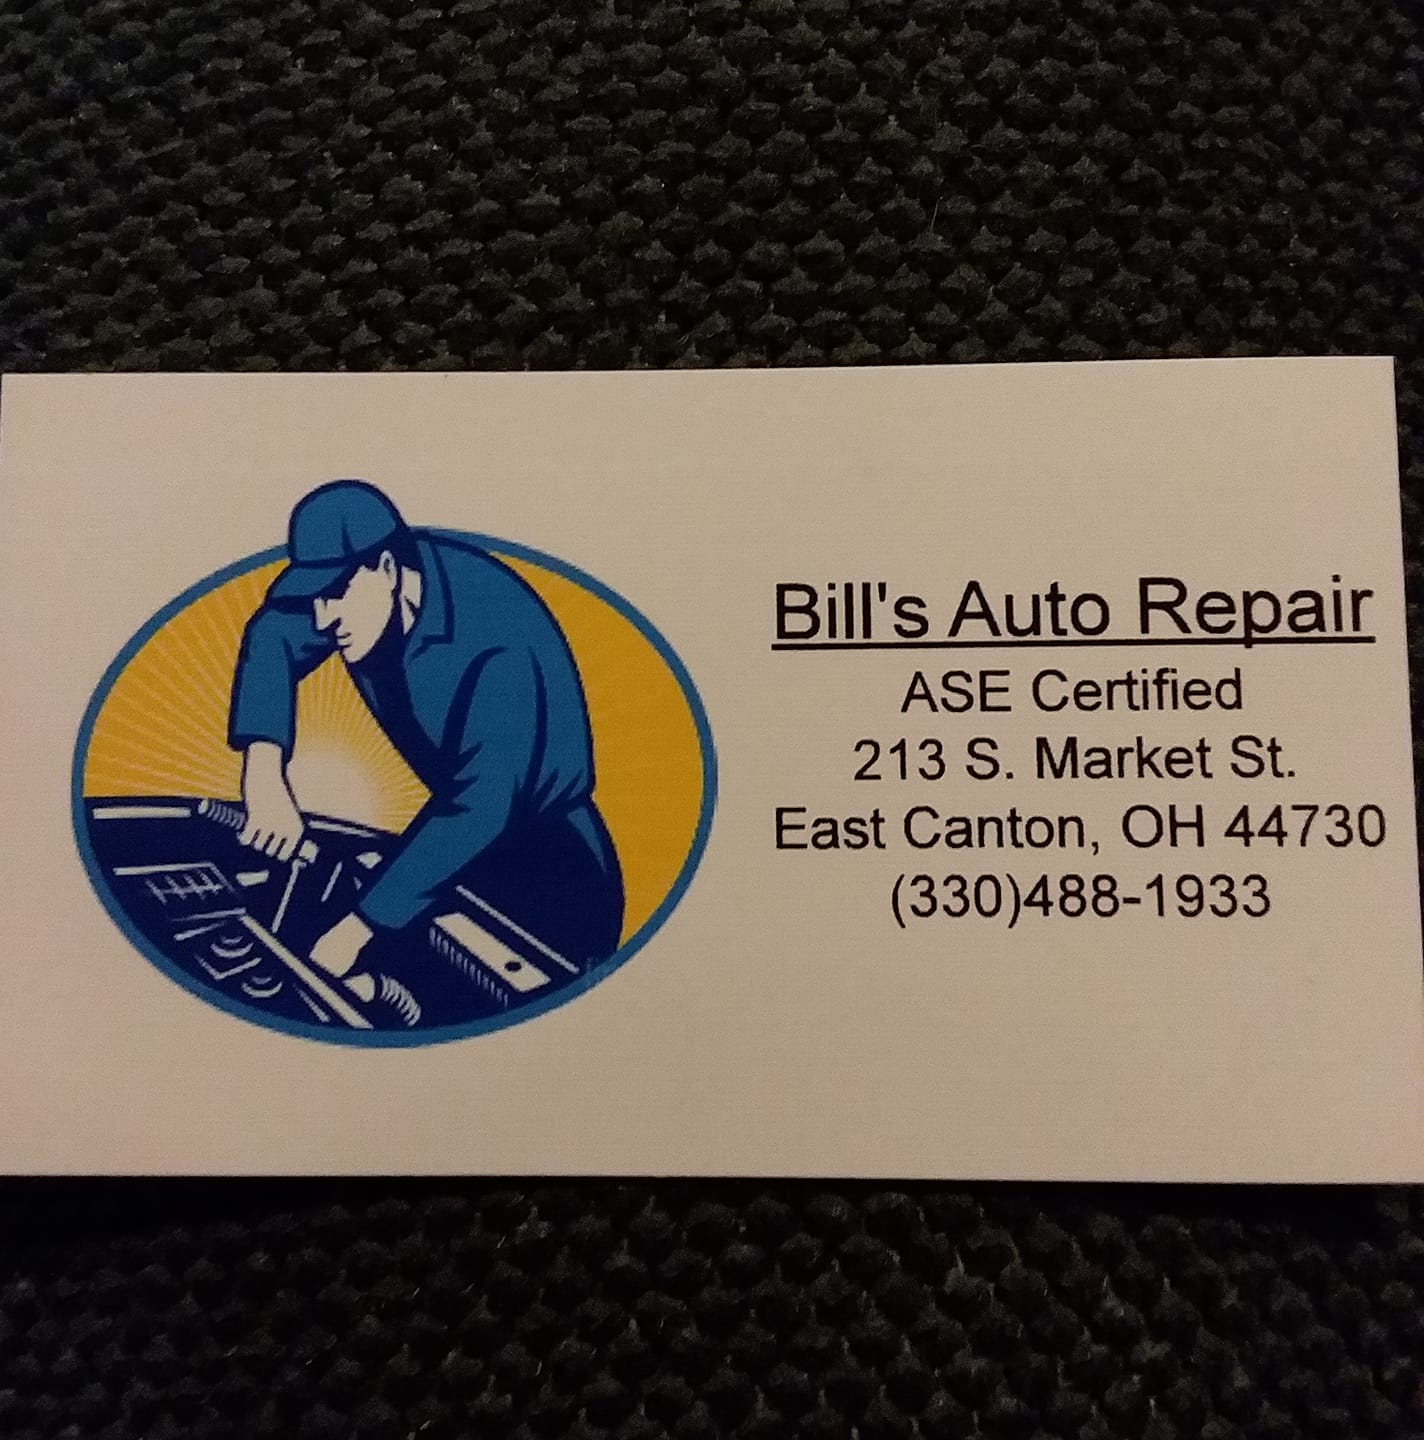 Bills Auto Repair